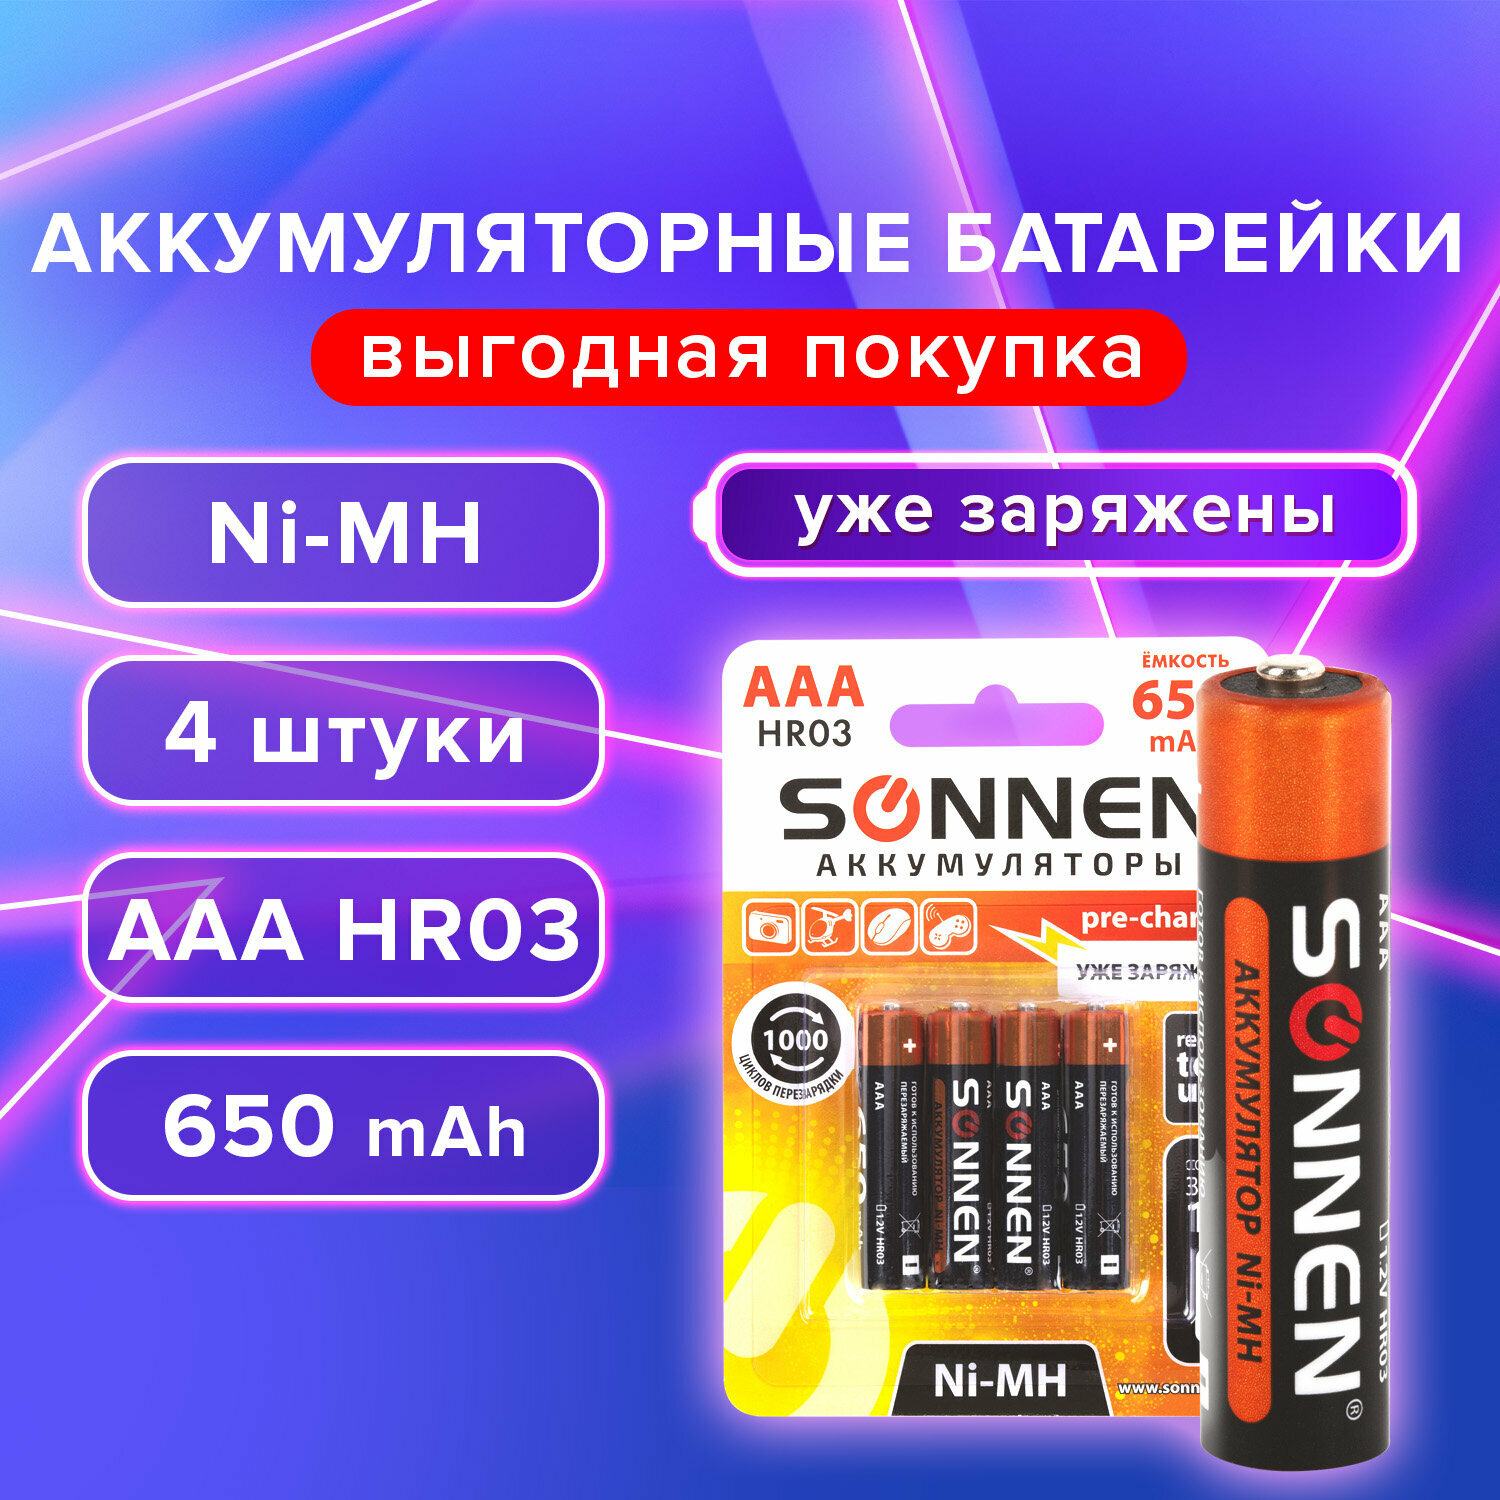 Батарейки аккумуляторные Sonnen Ni-Mh, мизинчиковые, 4 штуки, AAA (HR03), 650 mAh